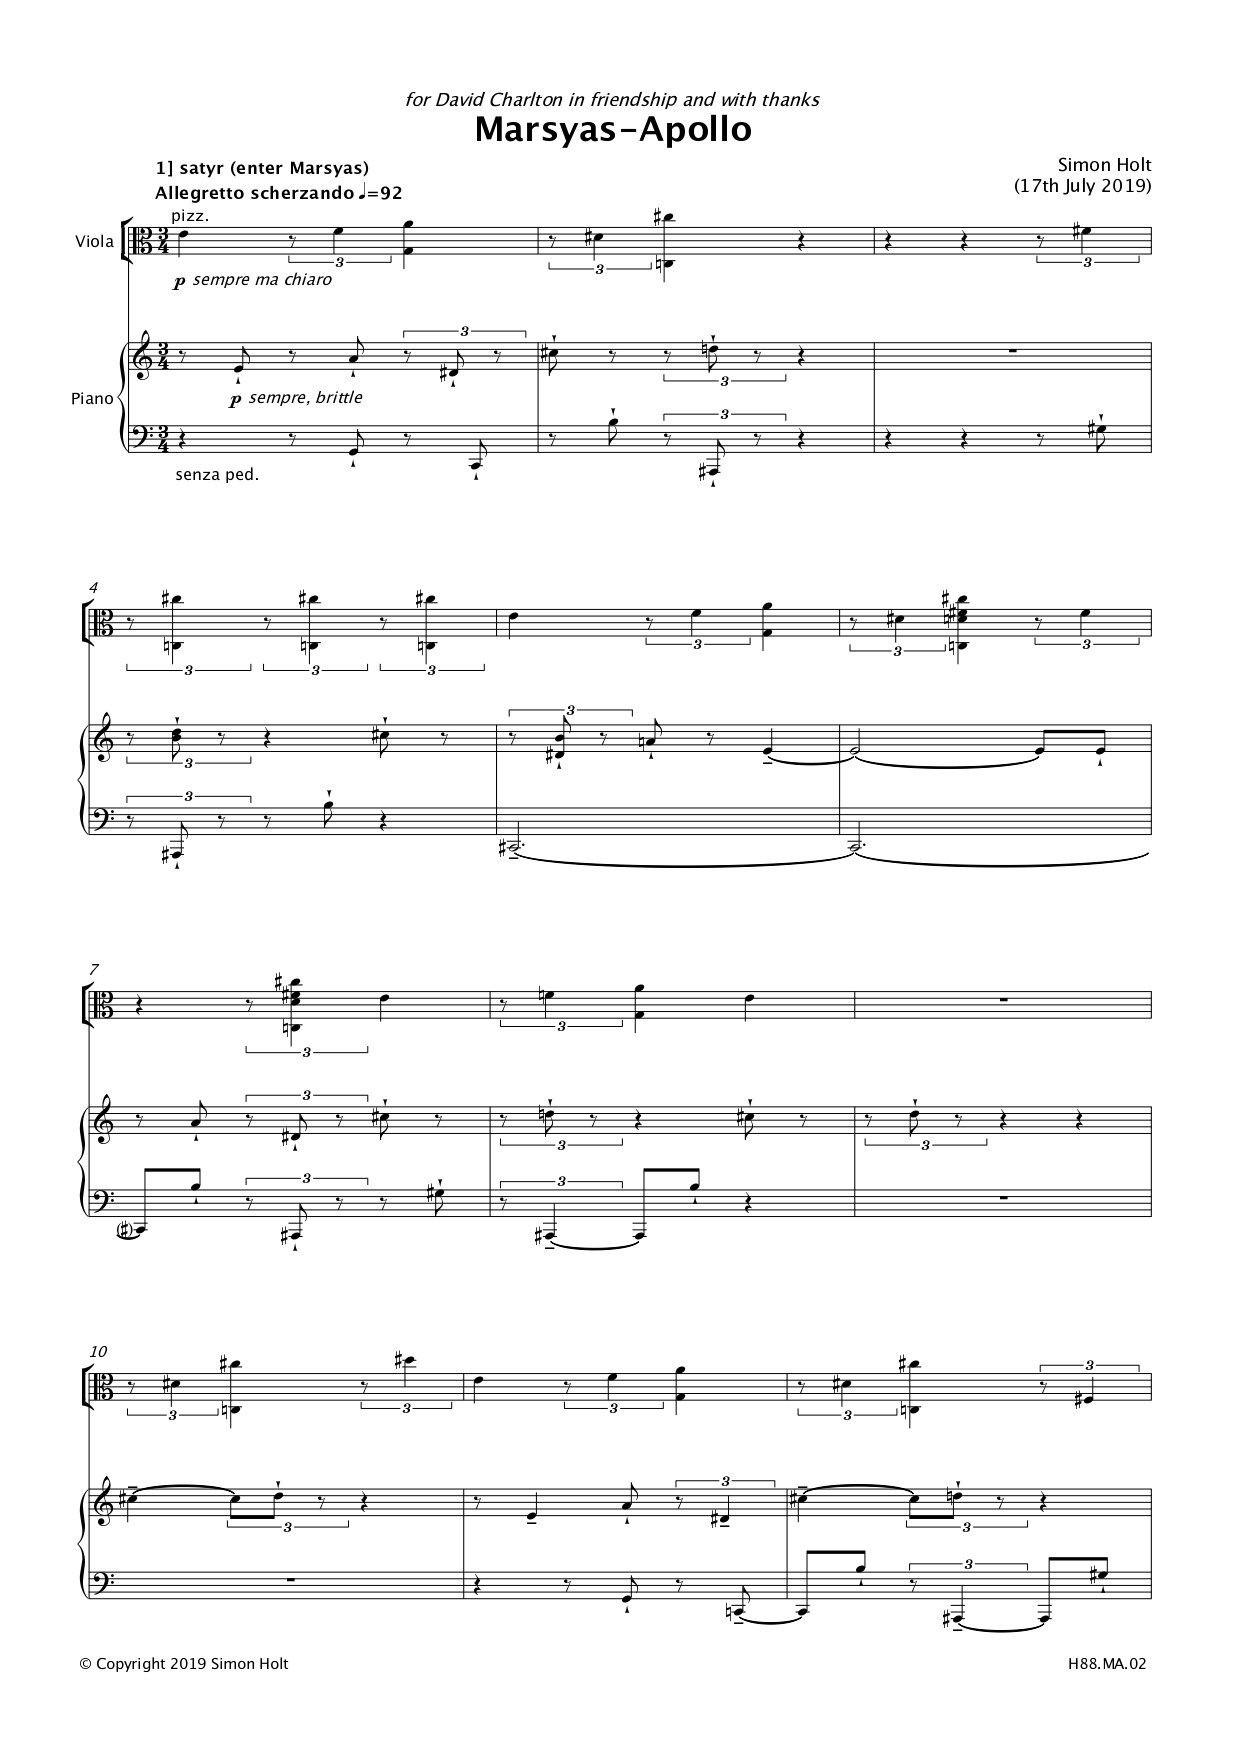 MarsyasApollo Full Score version2 (1)_page-0001.jpg